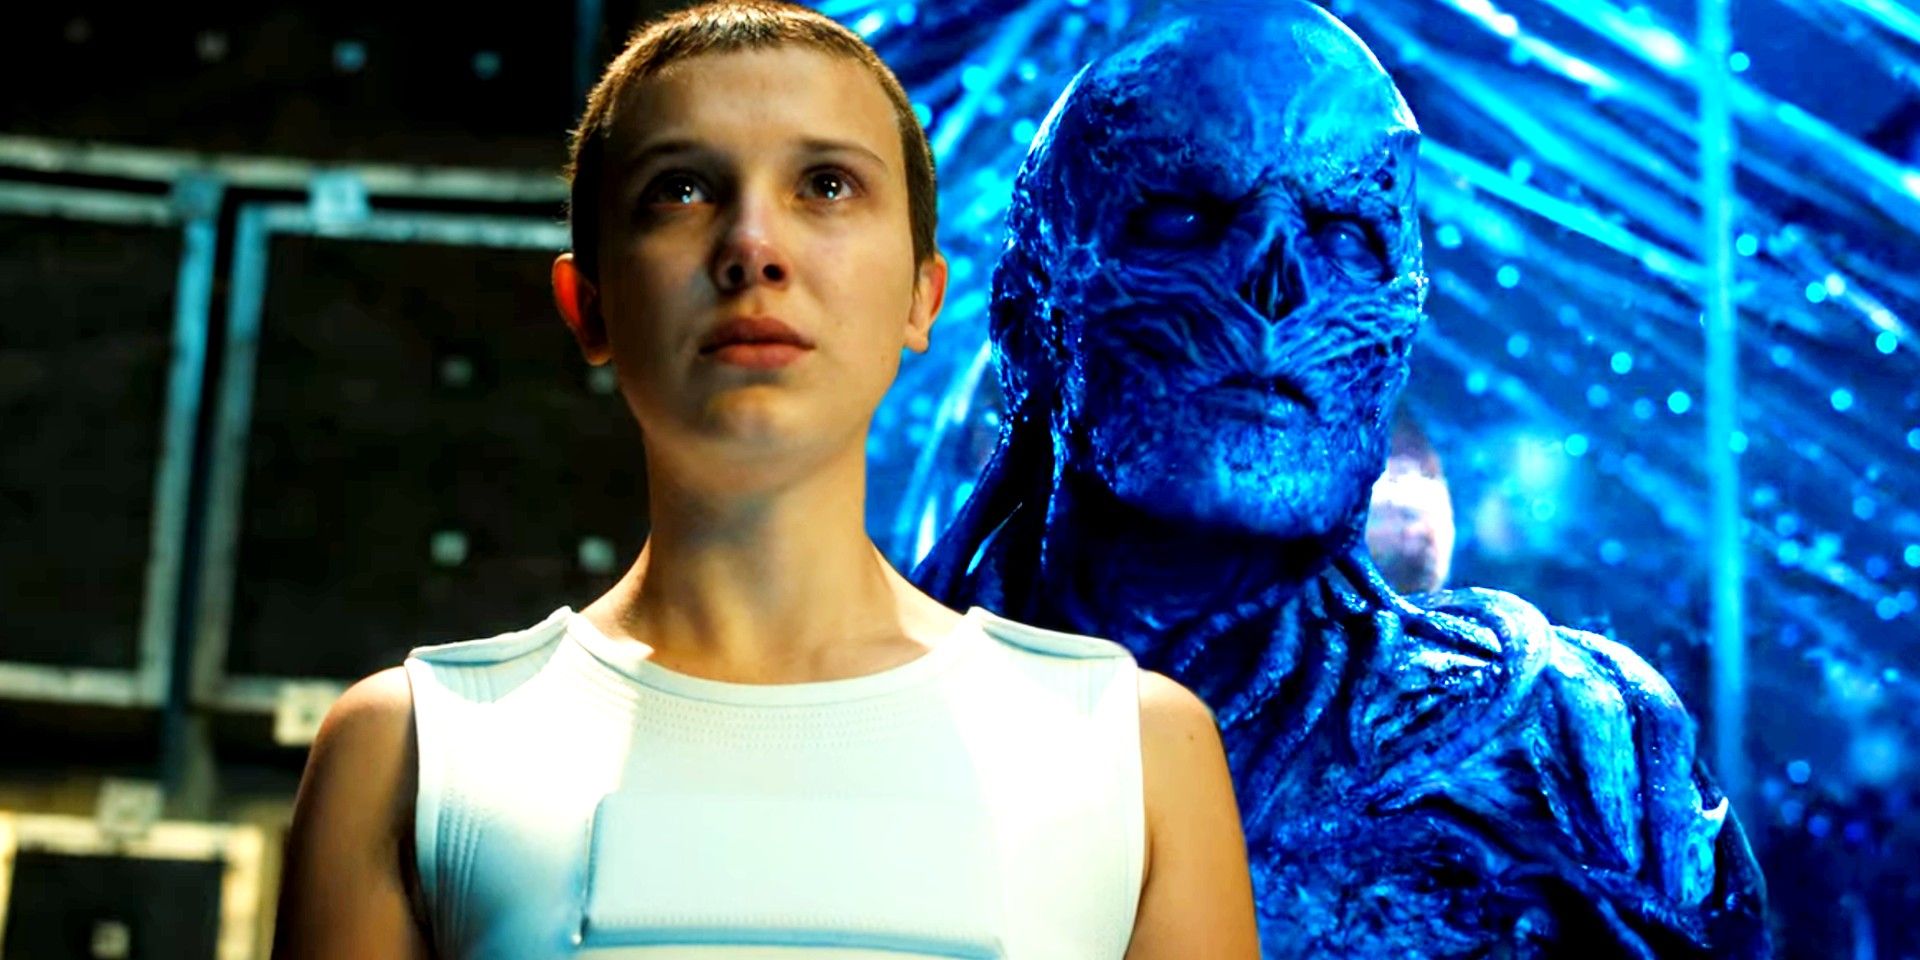 Custom image of Eleven and Vecna in Stranger Things season 4